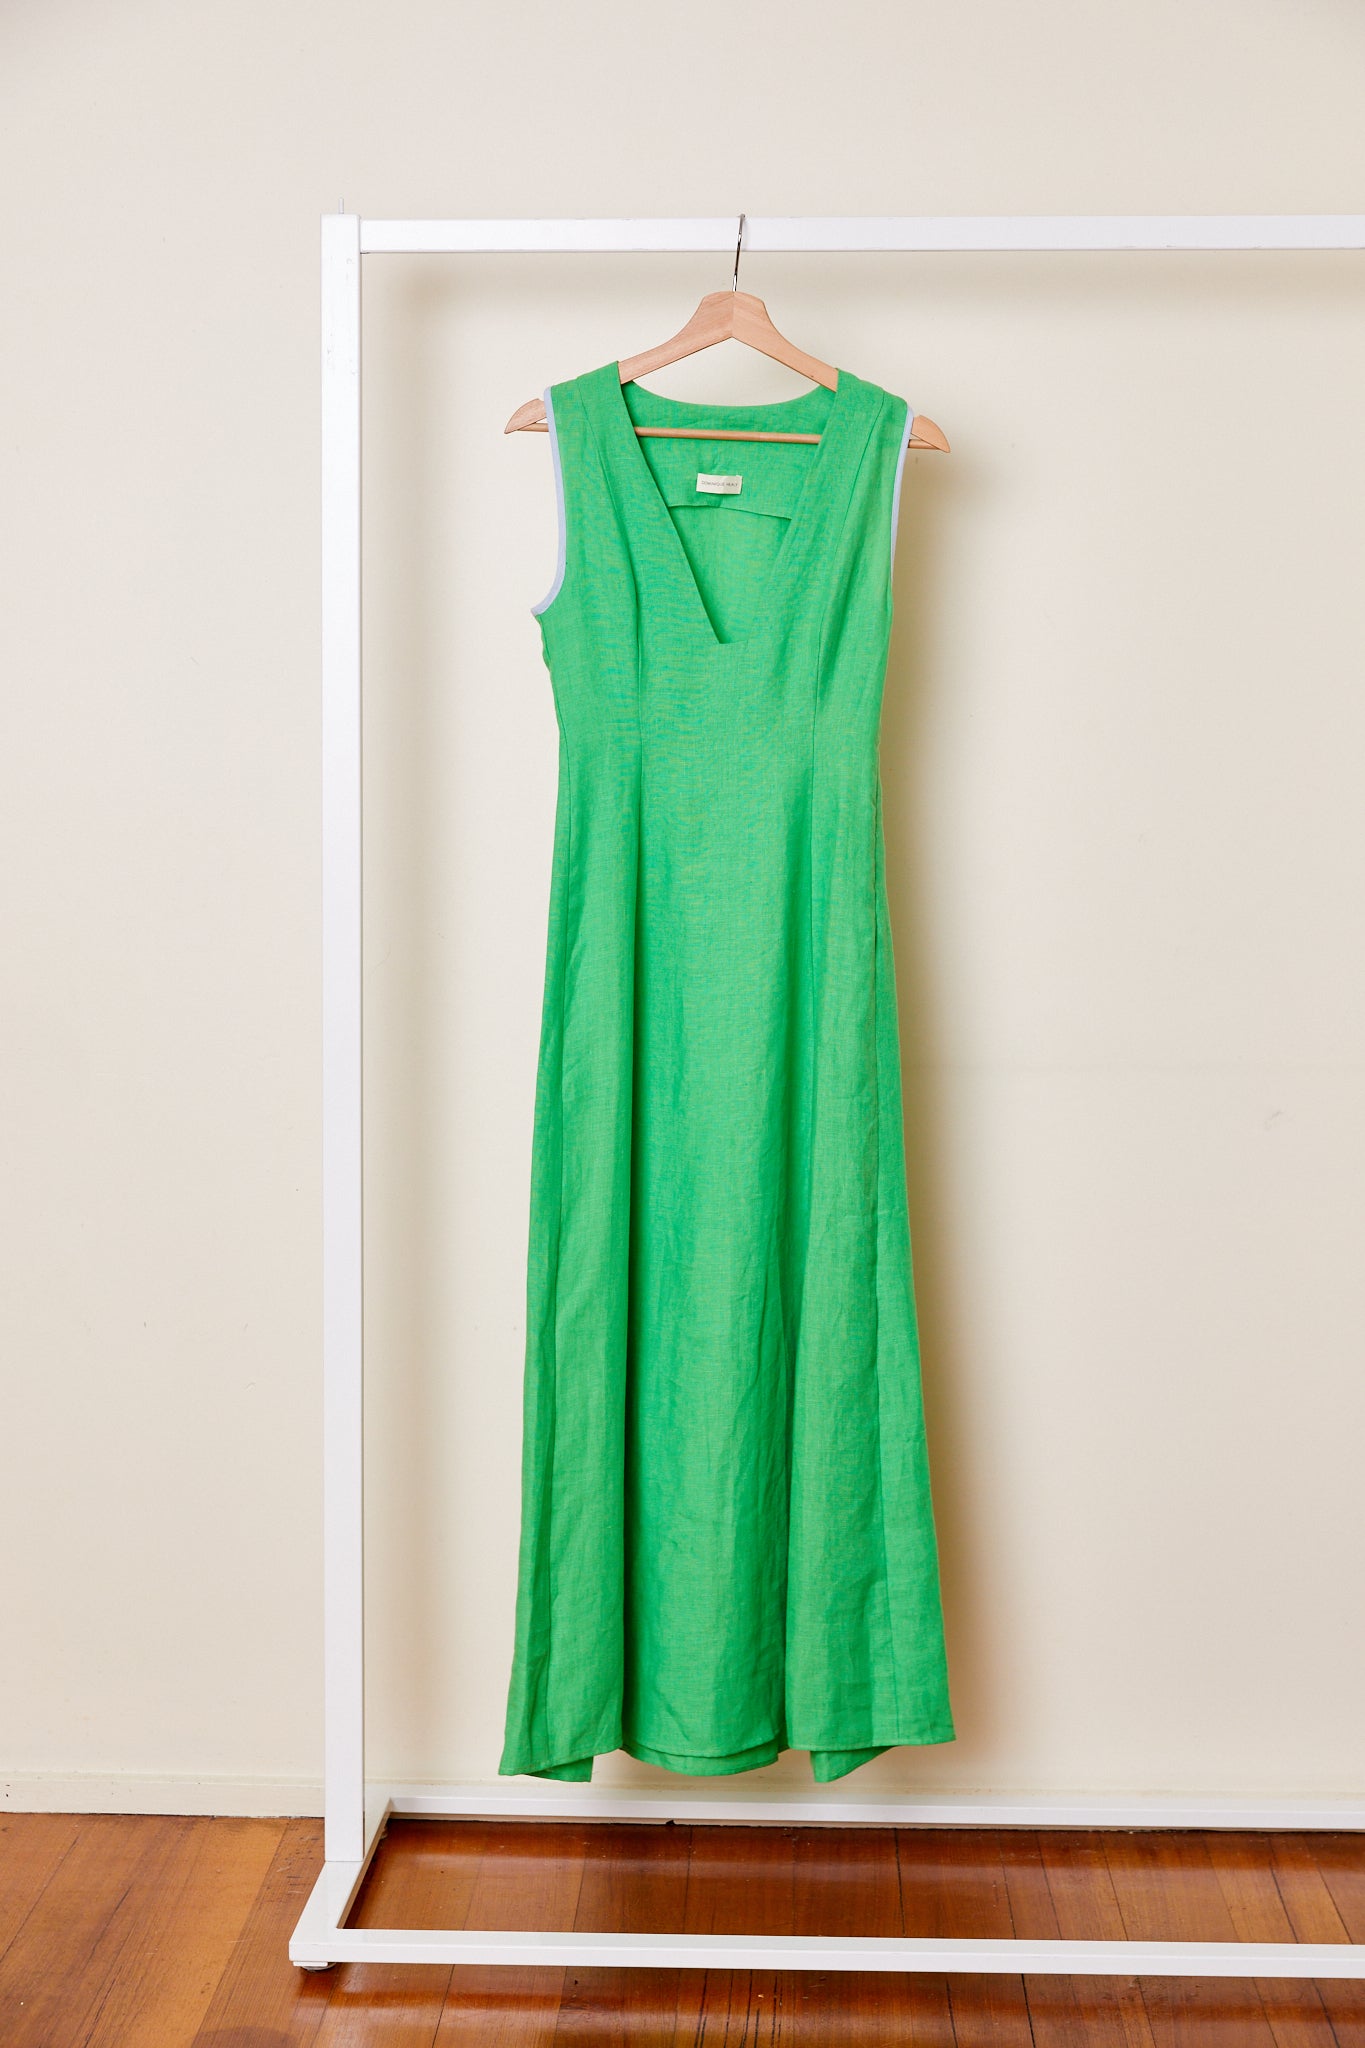 Next Lifetime Dress | Parakeet $380